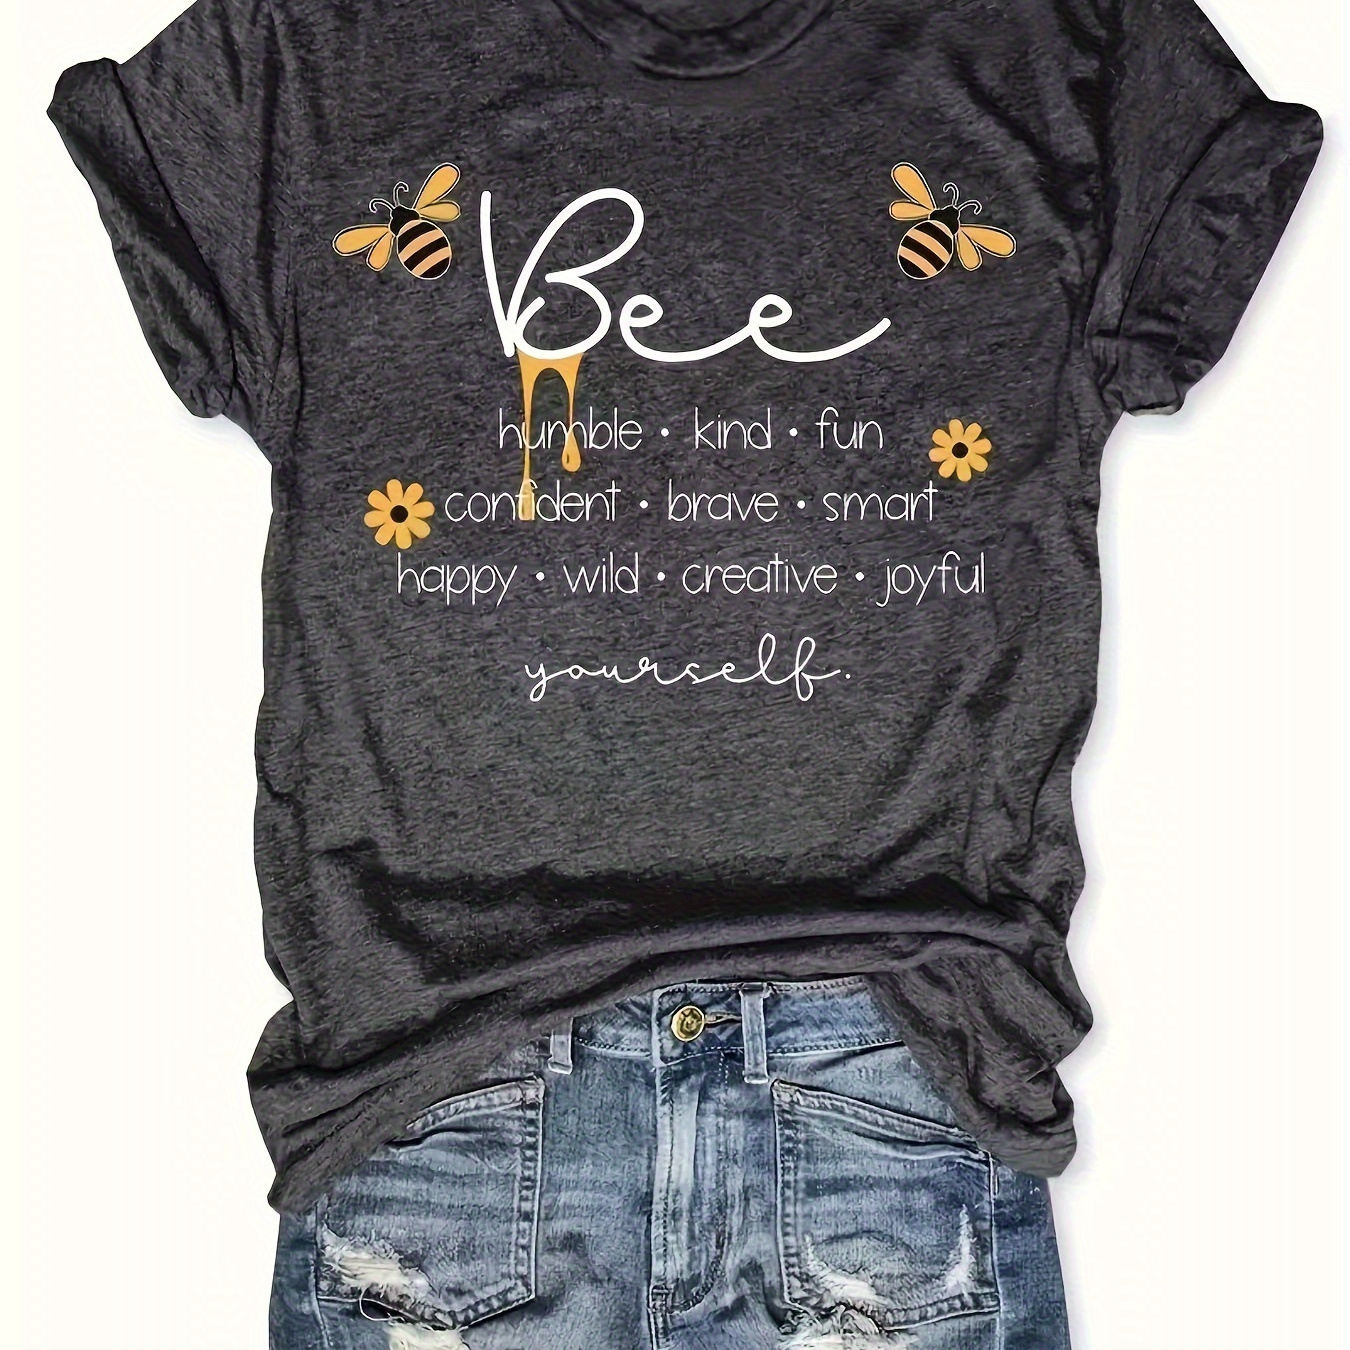 

Bee & Letter Print Summer T-shirt, Cute Short Sleeve Crew Neck Top, Women's Clothing